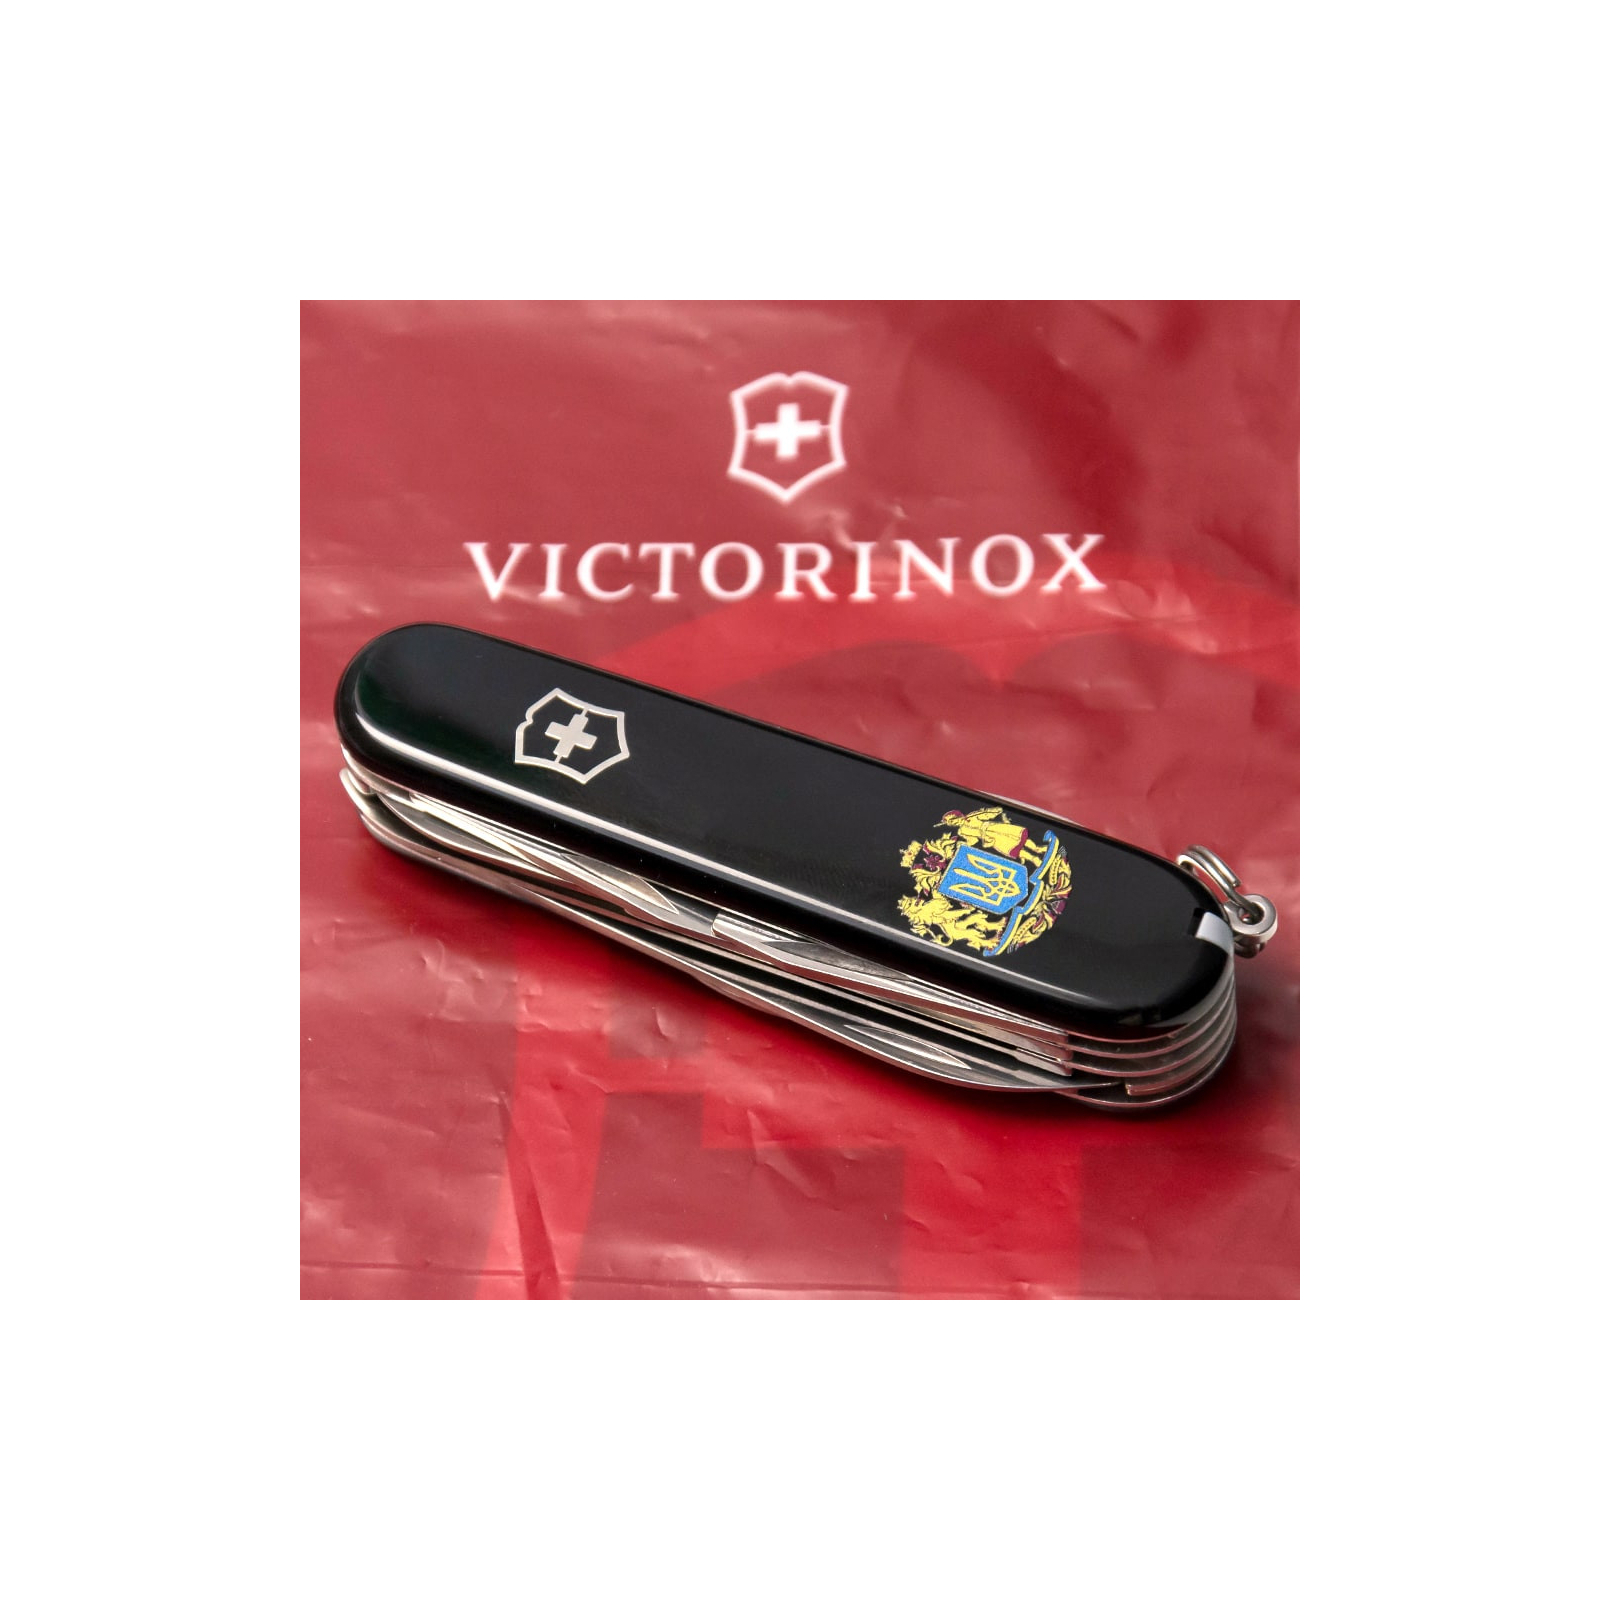 Нож Victorinox Huntsman Ukraine 91 мм Жовто-синій малюнок (1.3713.7_T3100p) изображение 3